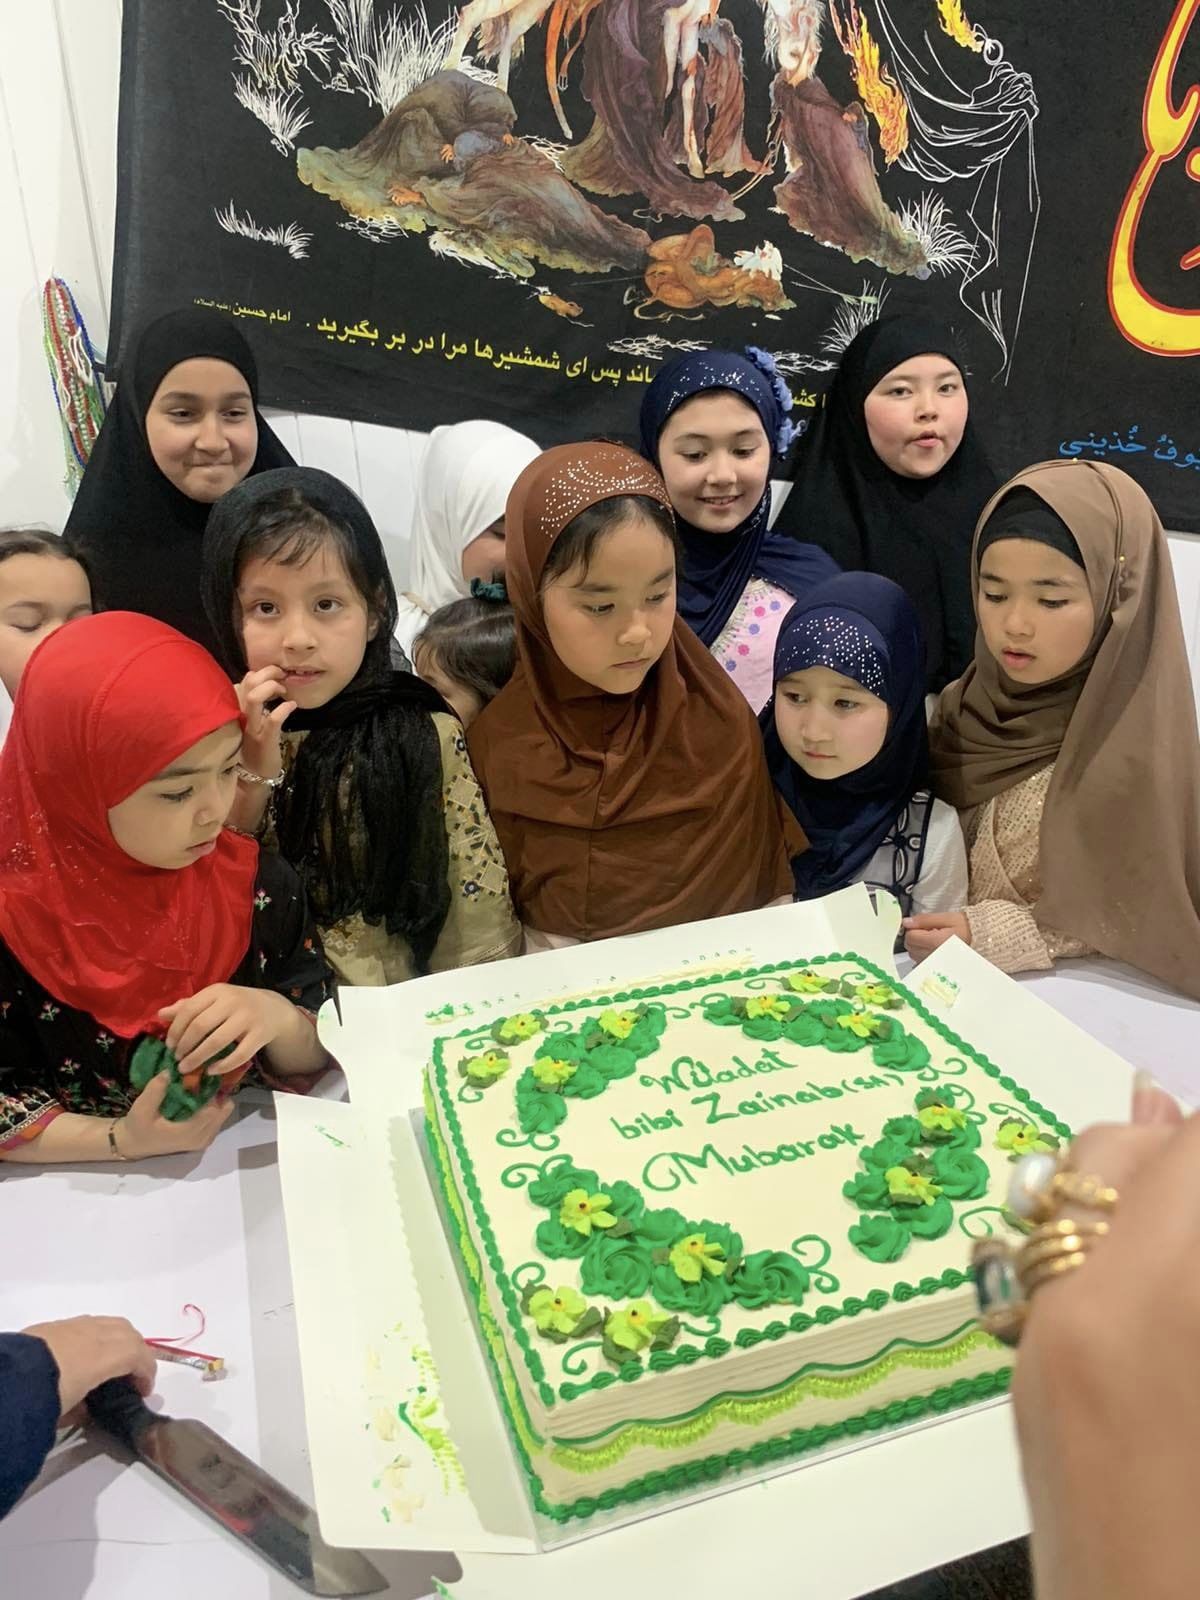 Photos: Celebrating birth anniversary of Sayeda Zainab at Victoria Shia Center in Melbourne, Australia